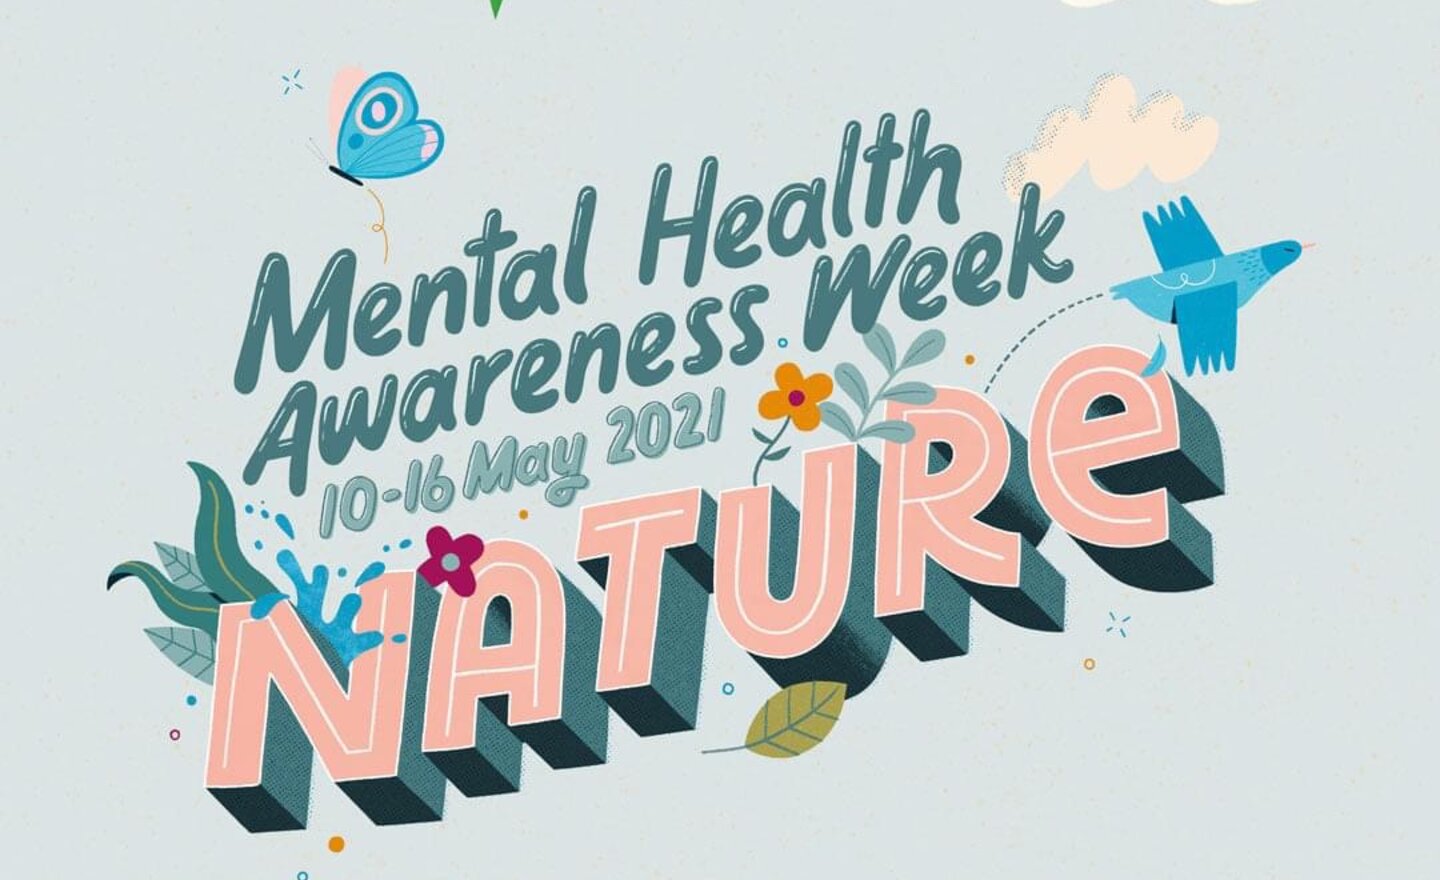 Image of Mental Health Awareness Week in Year 2